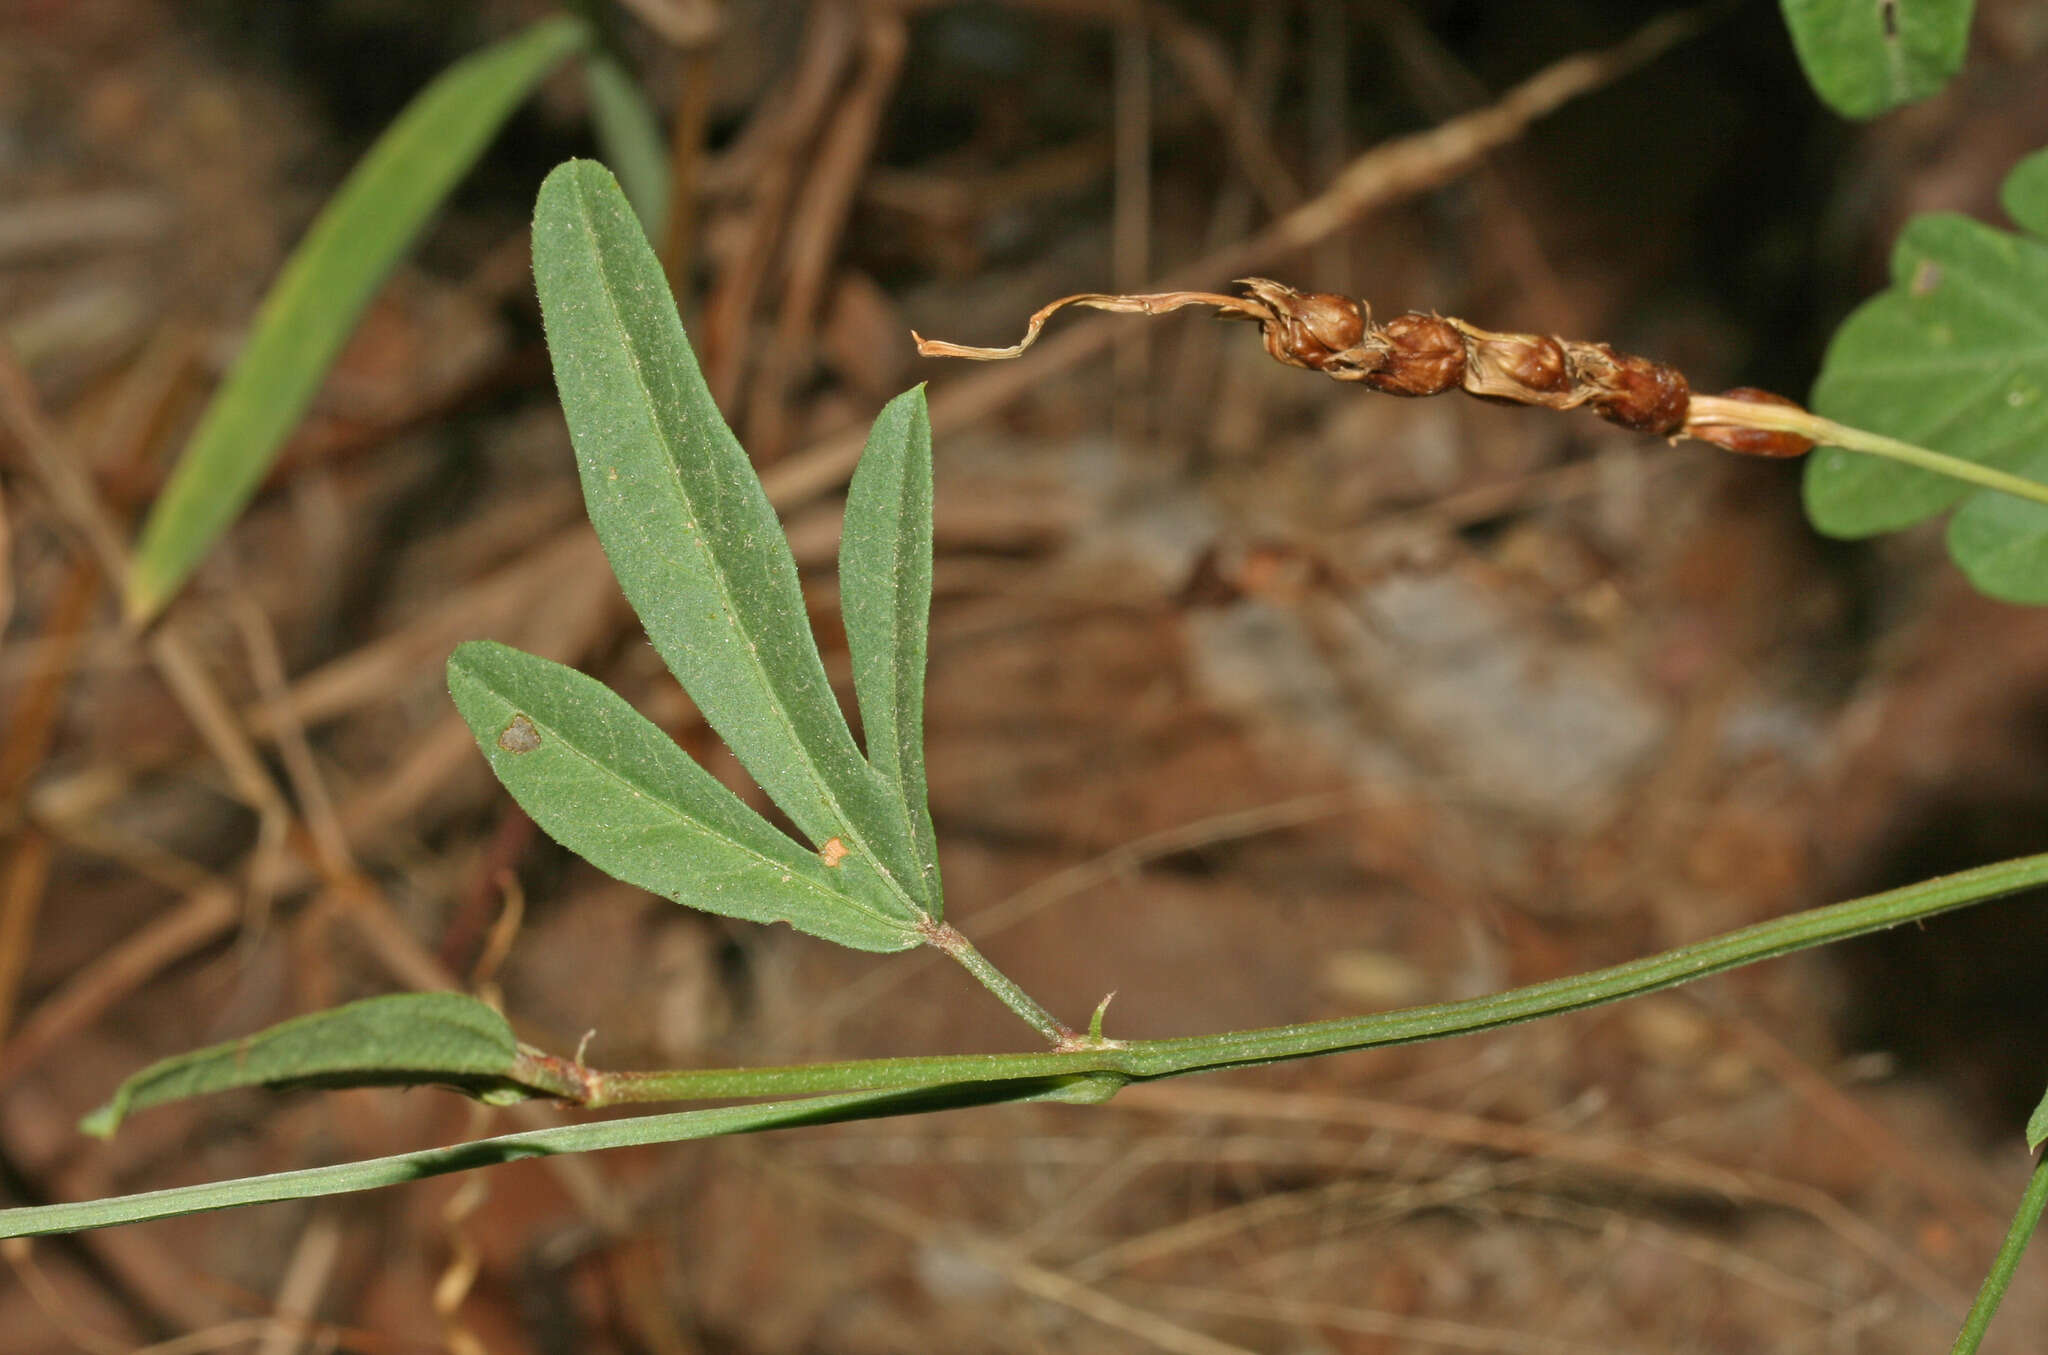 Image of Cienfuegosia tripartita (Kunth) Gürke